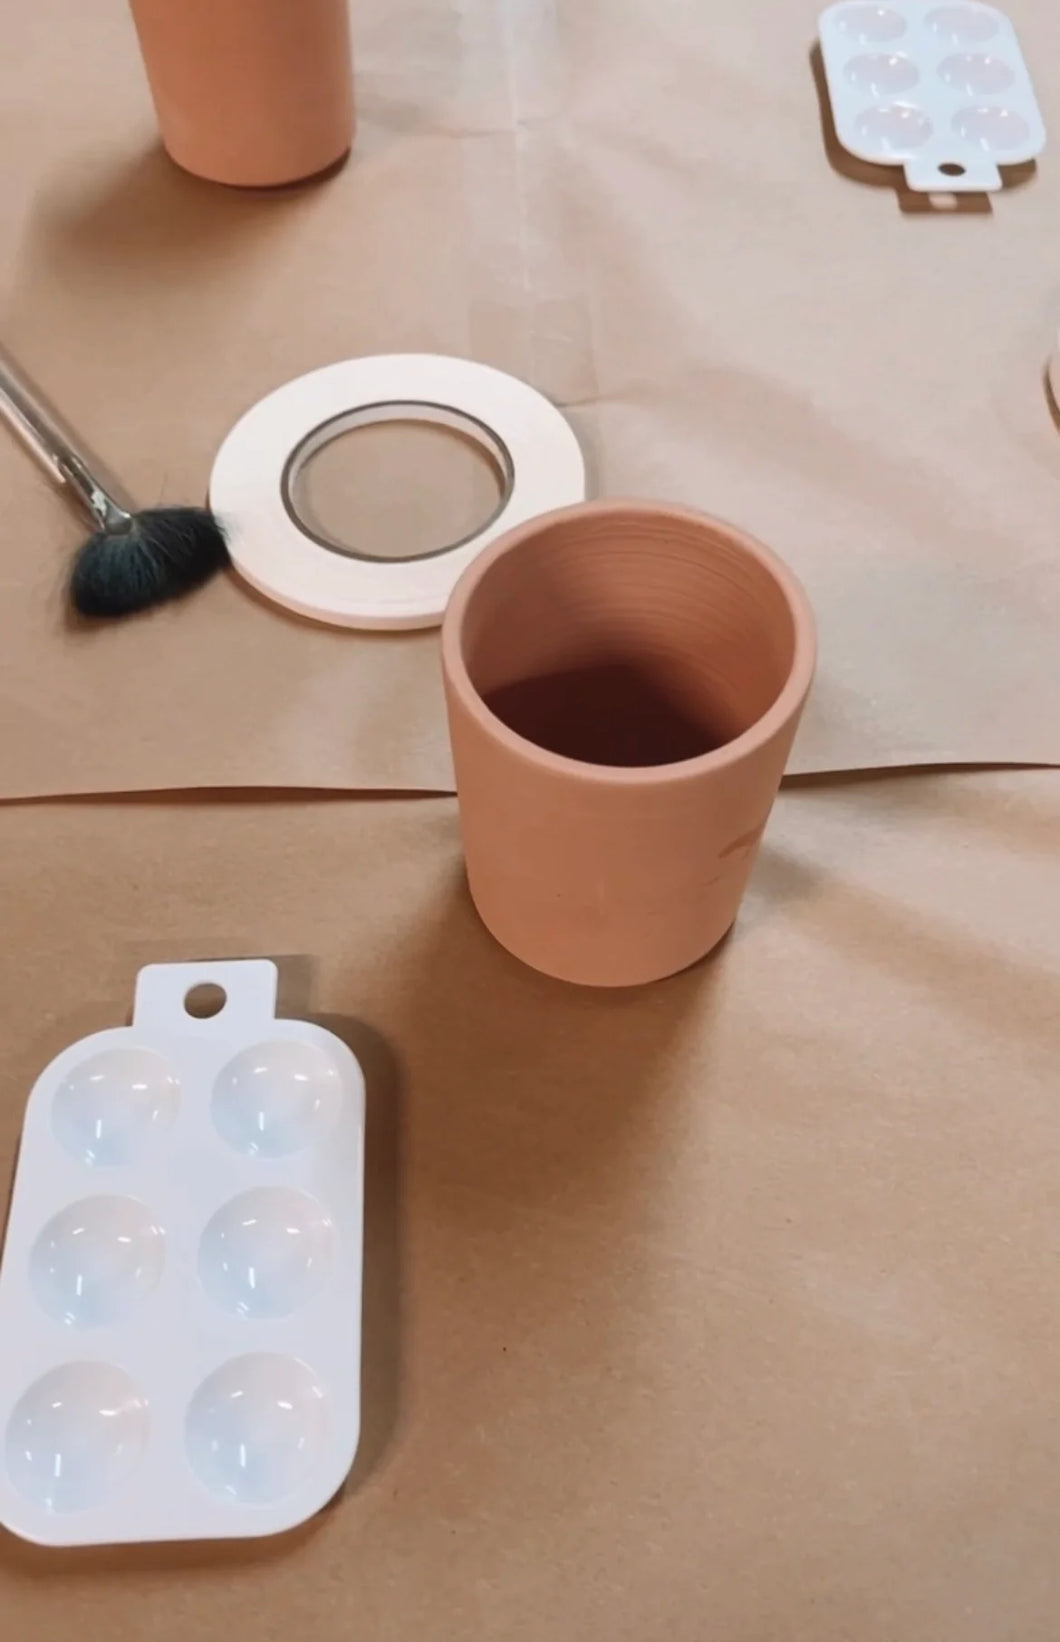 Paint your own mug night!